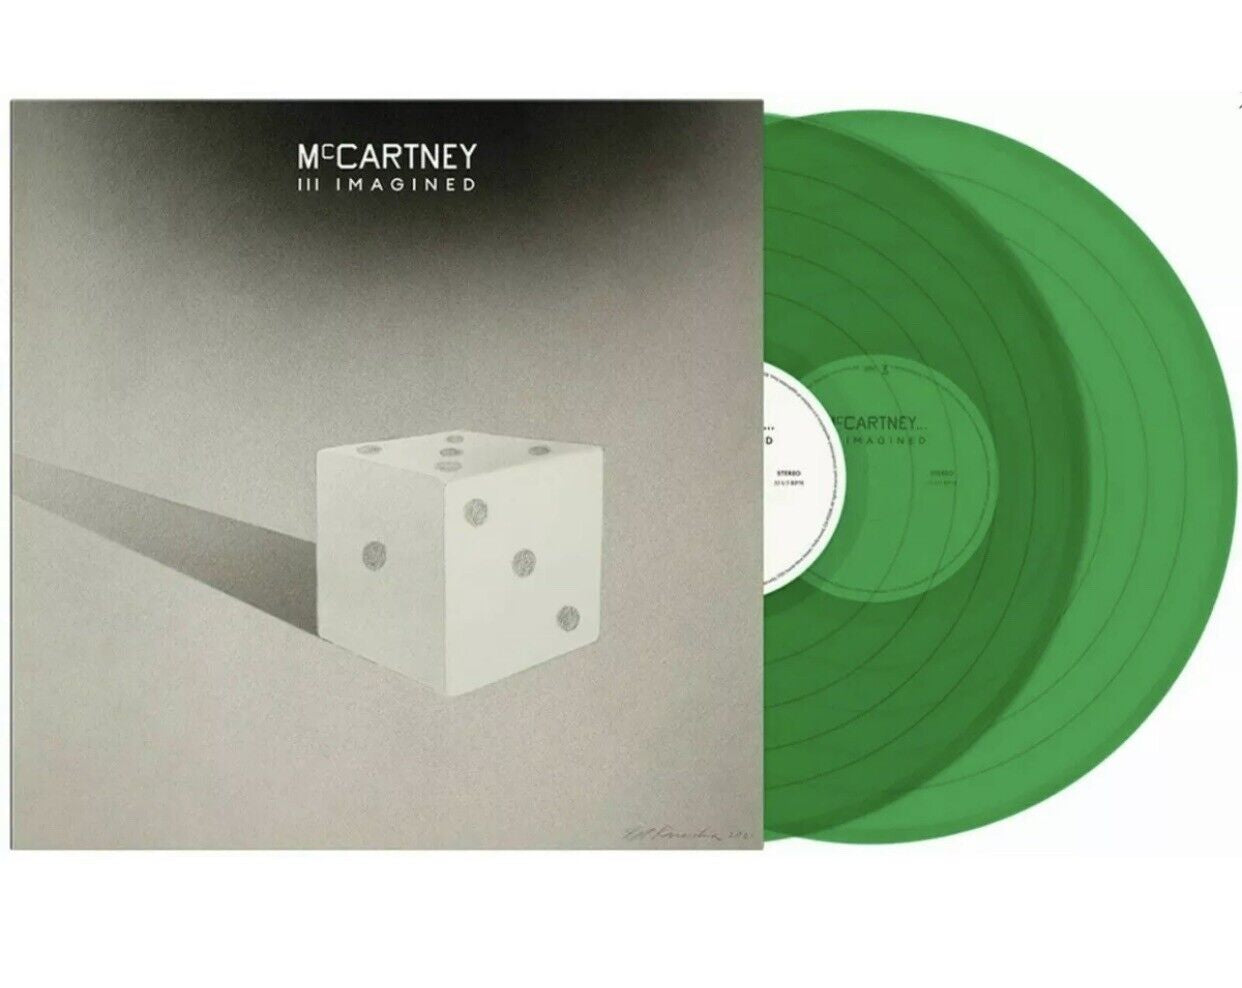 Paul McCartney "McCartney III Imagined" Green Color Vinyl LP Record